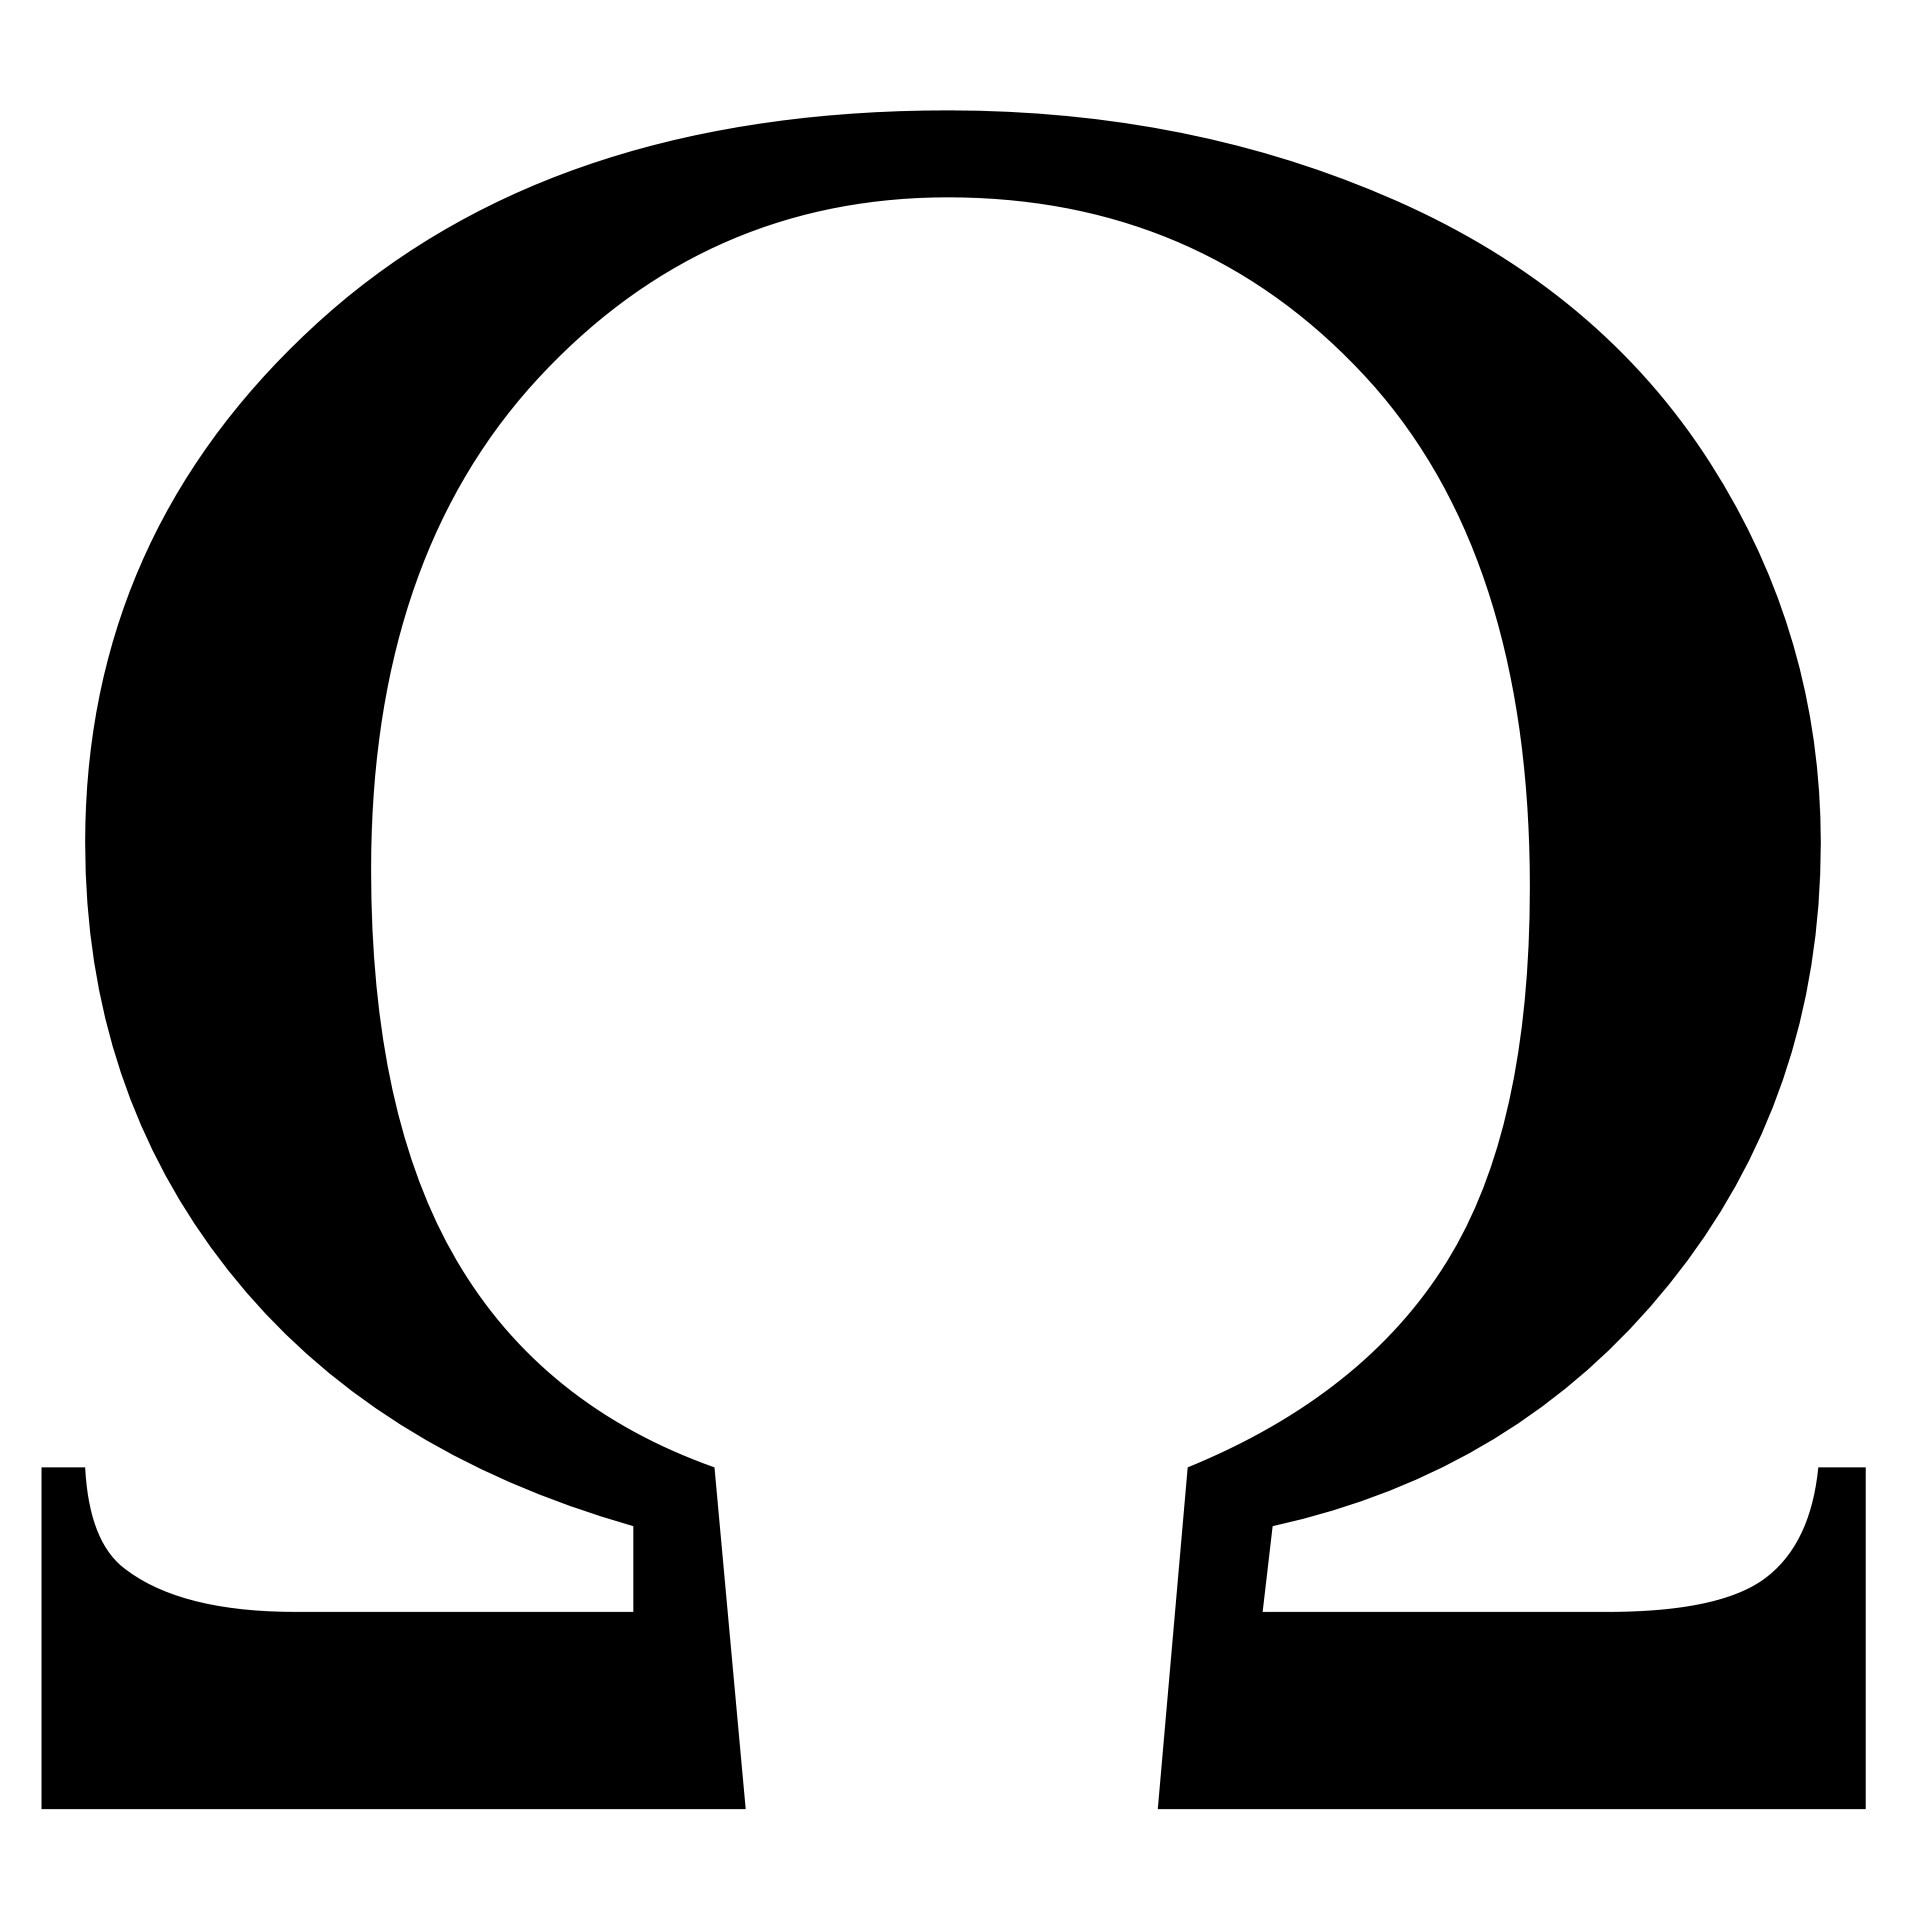 Omega Symbolsign And Its Meaning Mythologian - vrogue.co